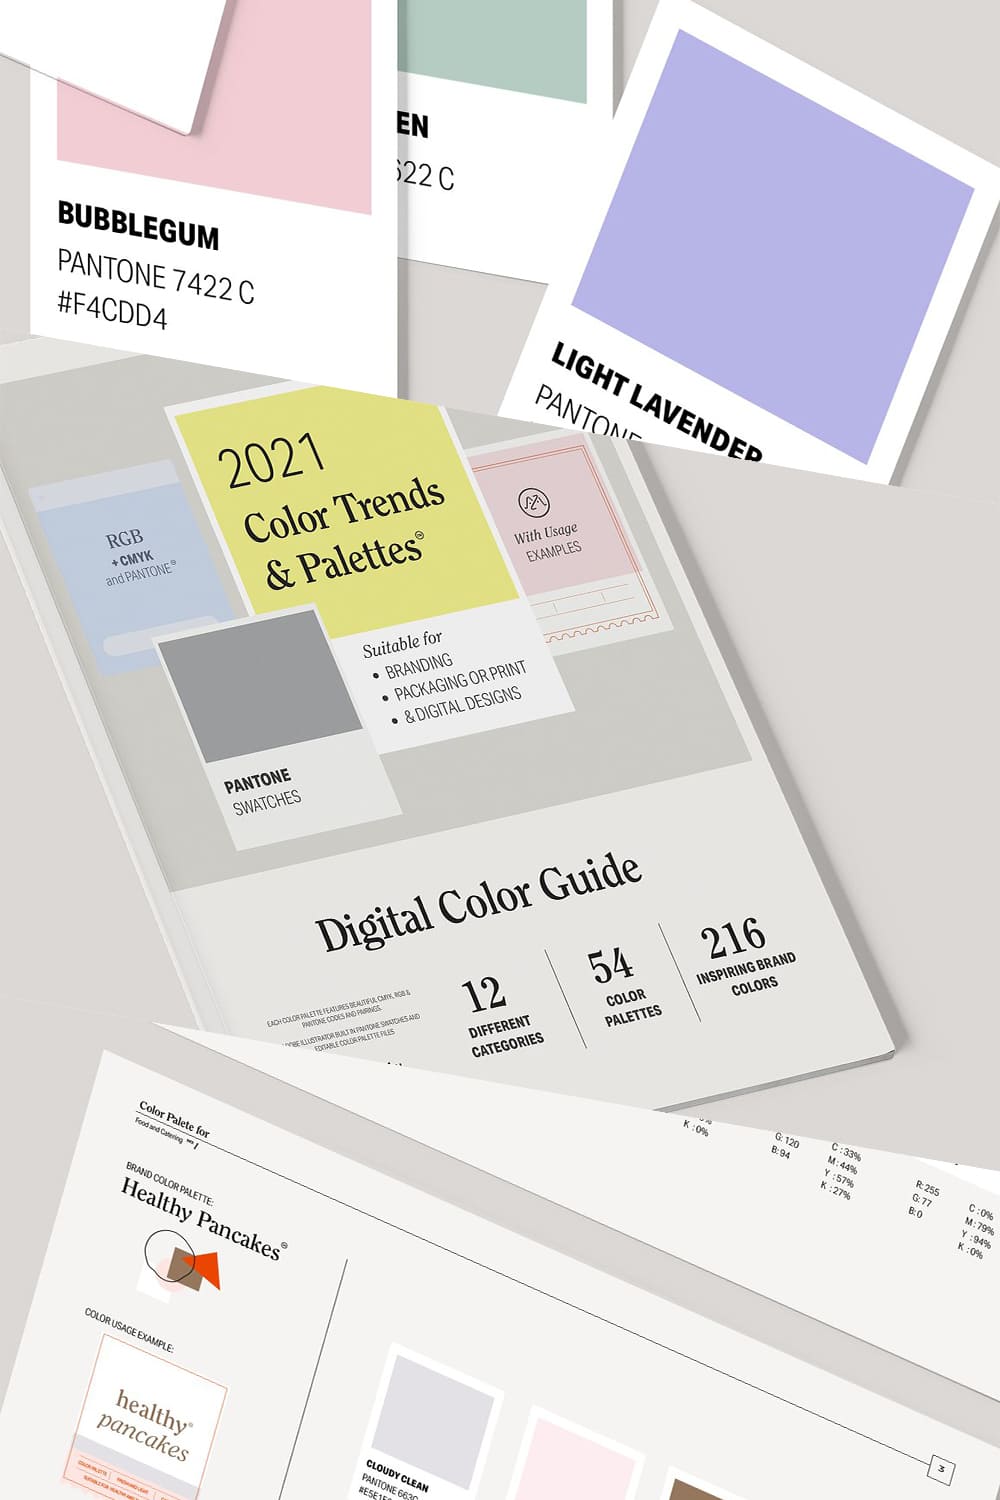 2021:Color Palettes and Color Trends Pinterest image.